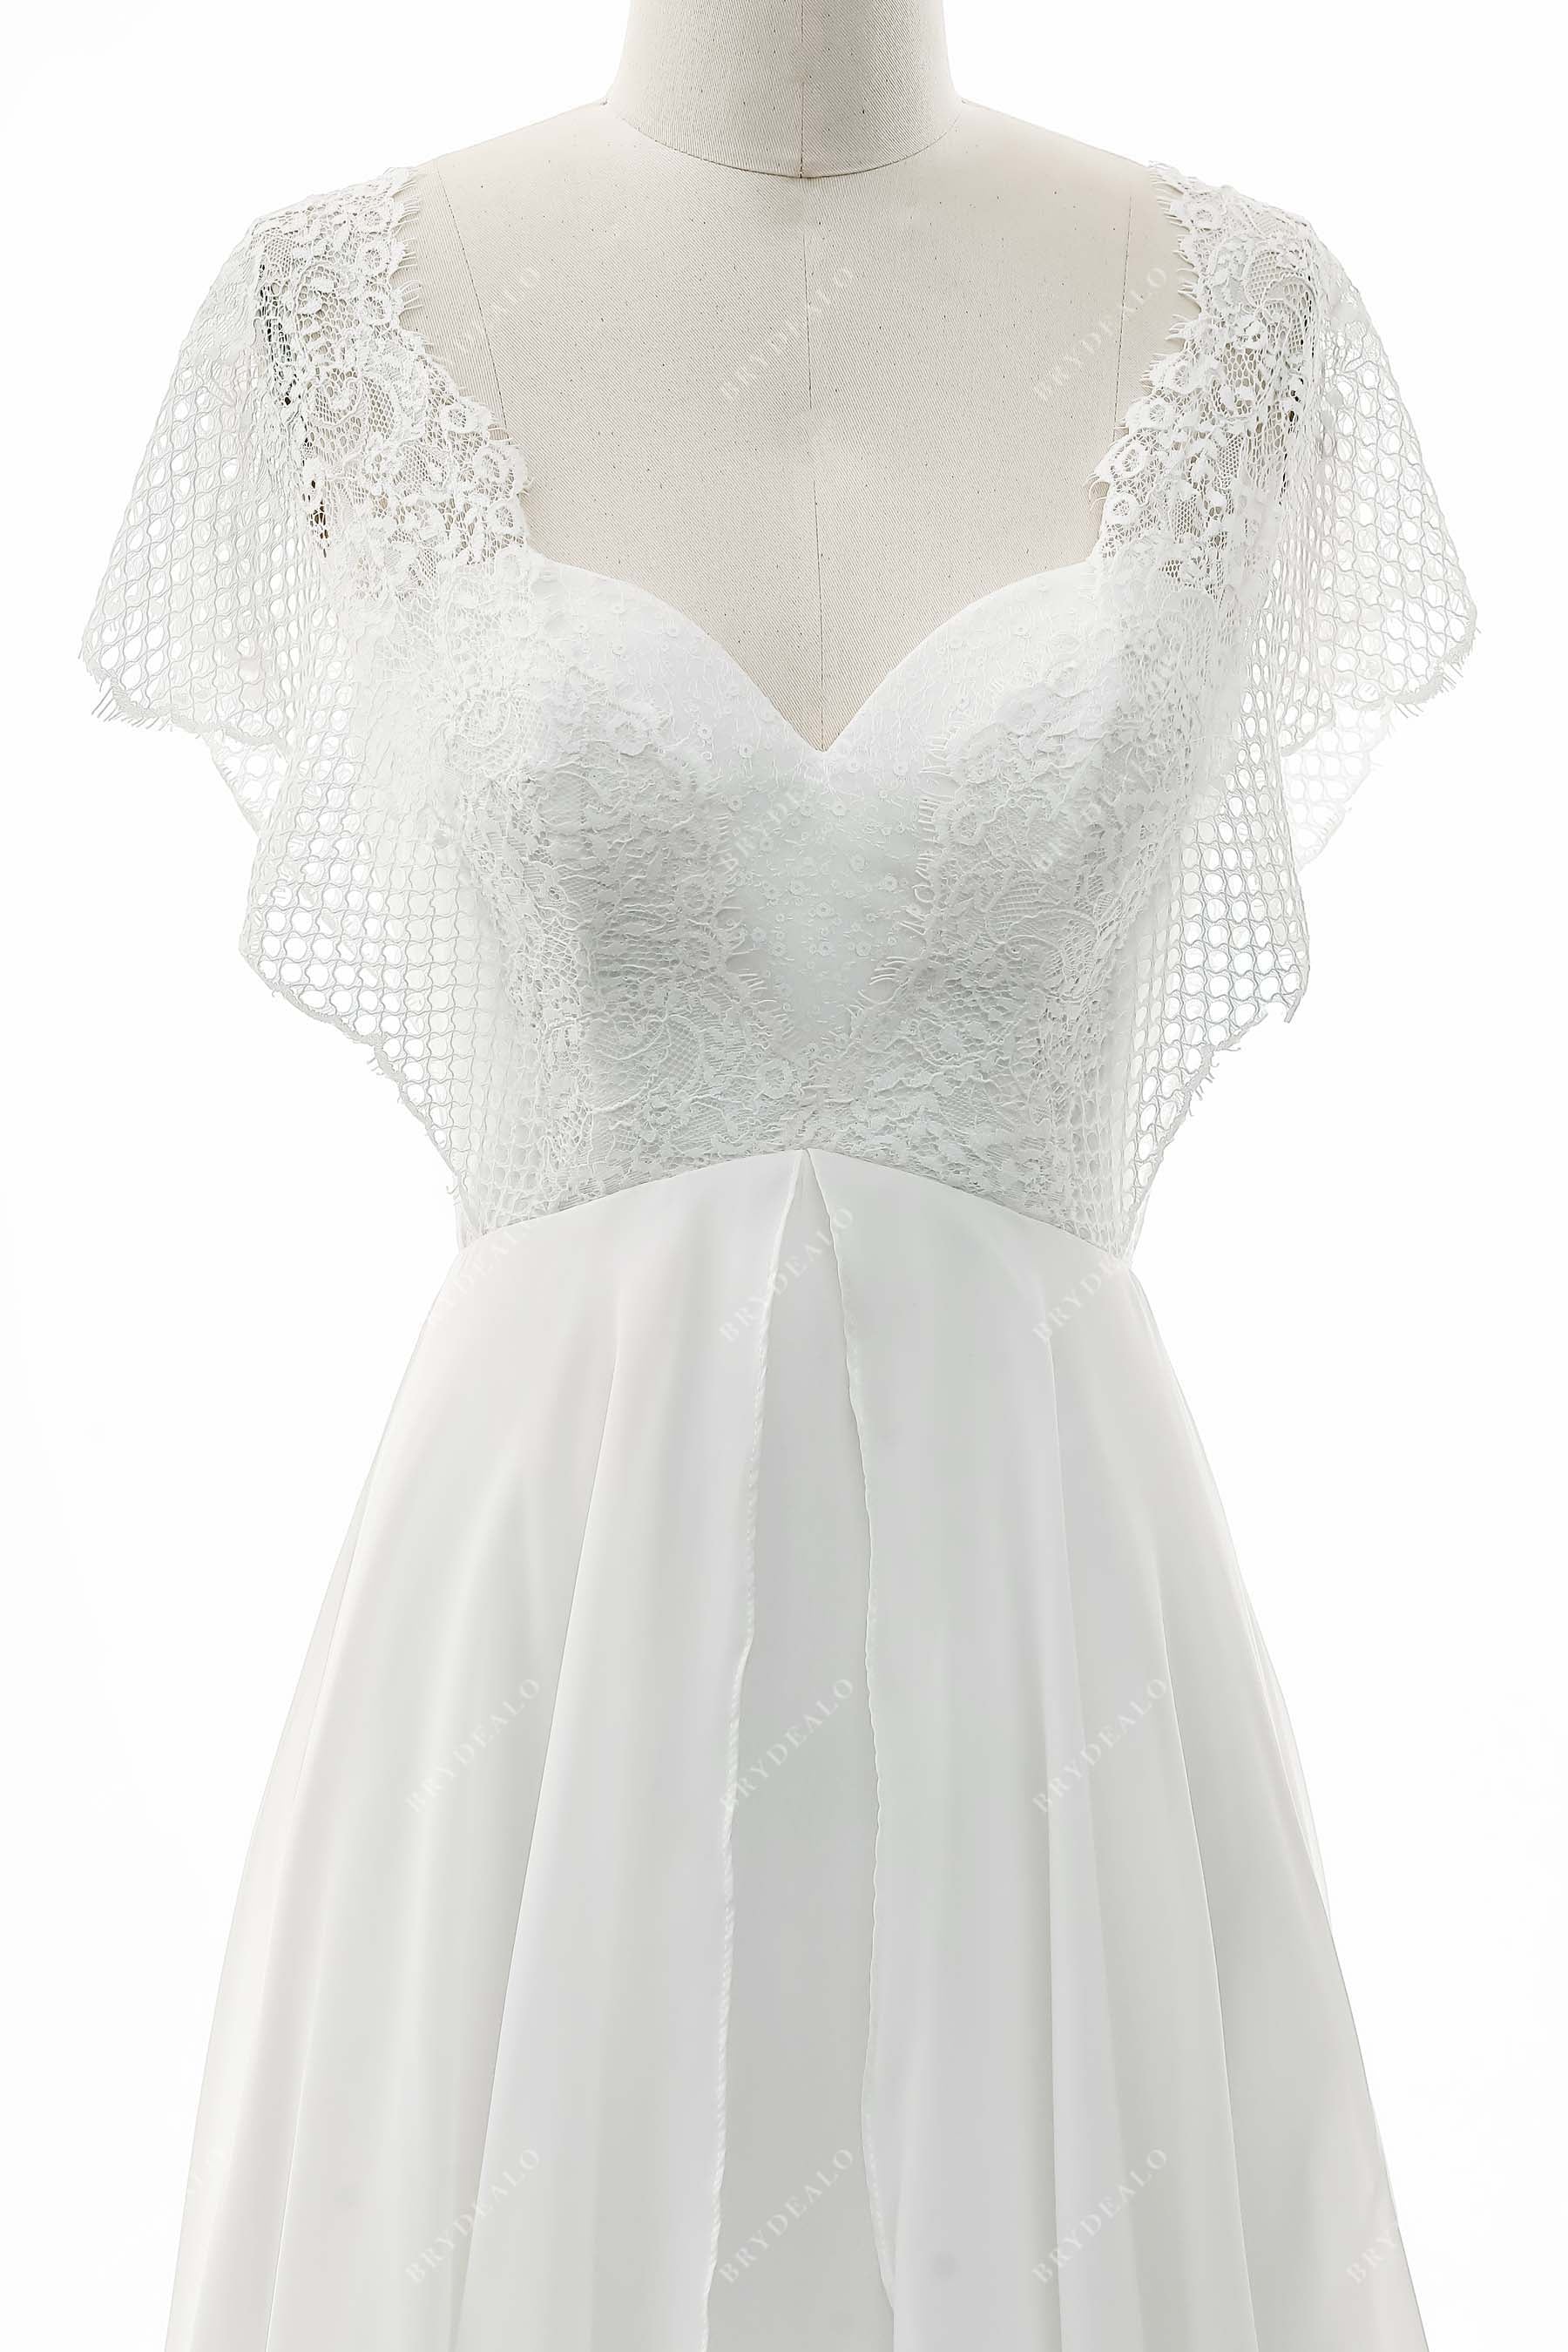 Batwing Sleeve   sweetheart Lace Chiffon Spring Wedding Dress